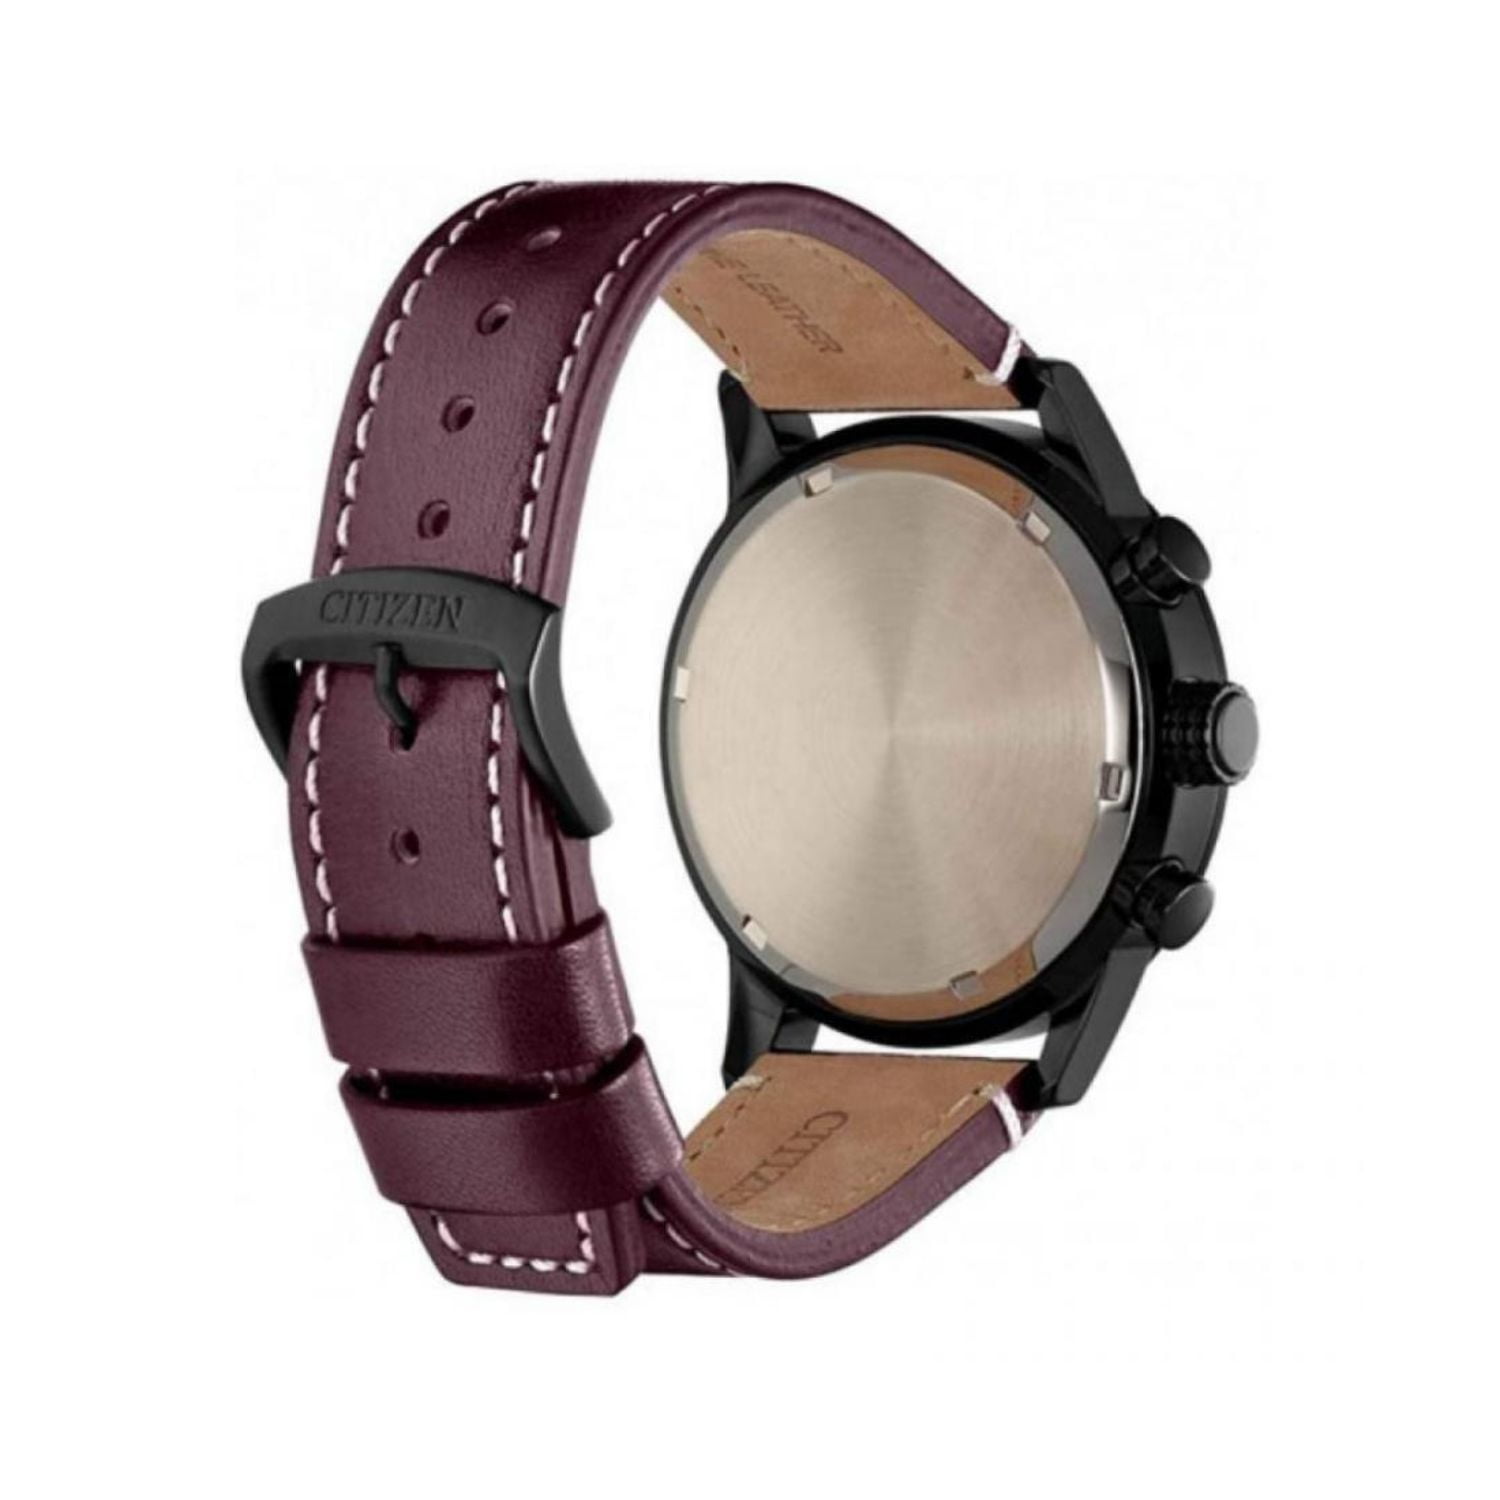 Citizen Men's Eco-Drive Chronograph Brown Leather Strap Watch